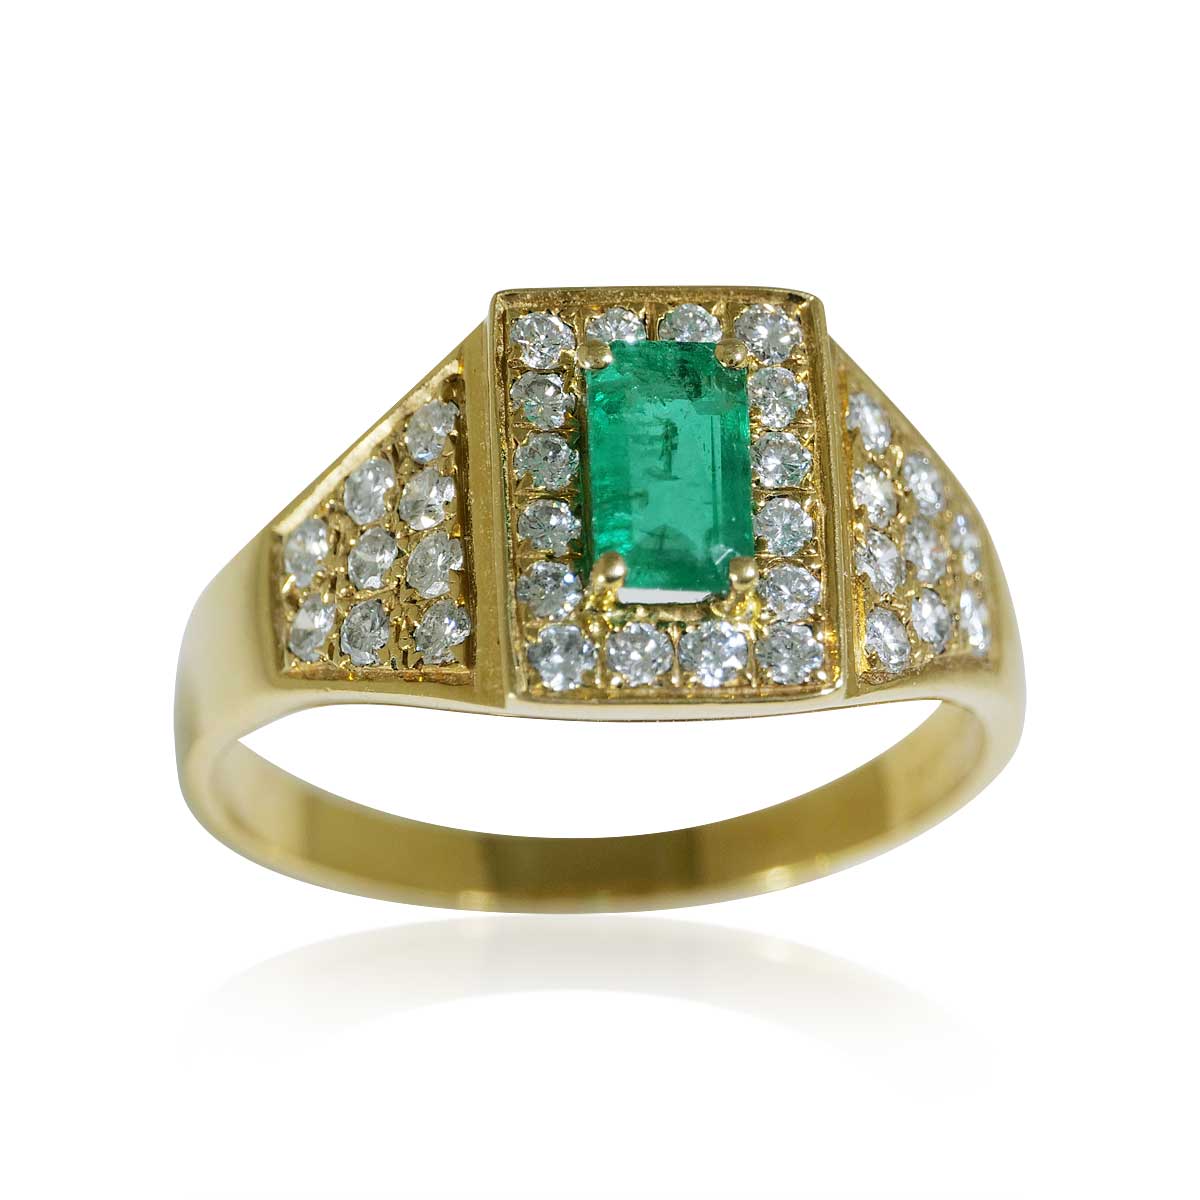 Smaragd-Brillant-Ring mit 34 Brillanten pavee,0,62ct Smaragd in 18 Kt Gold